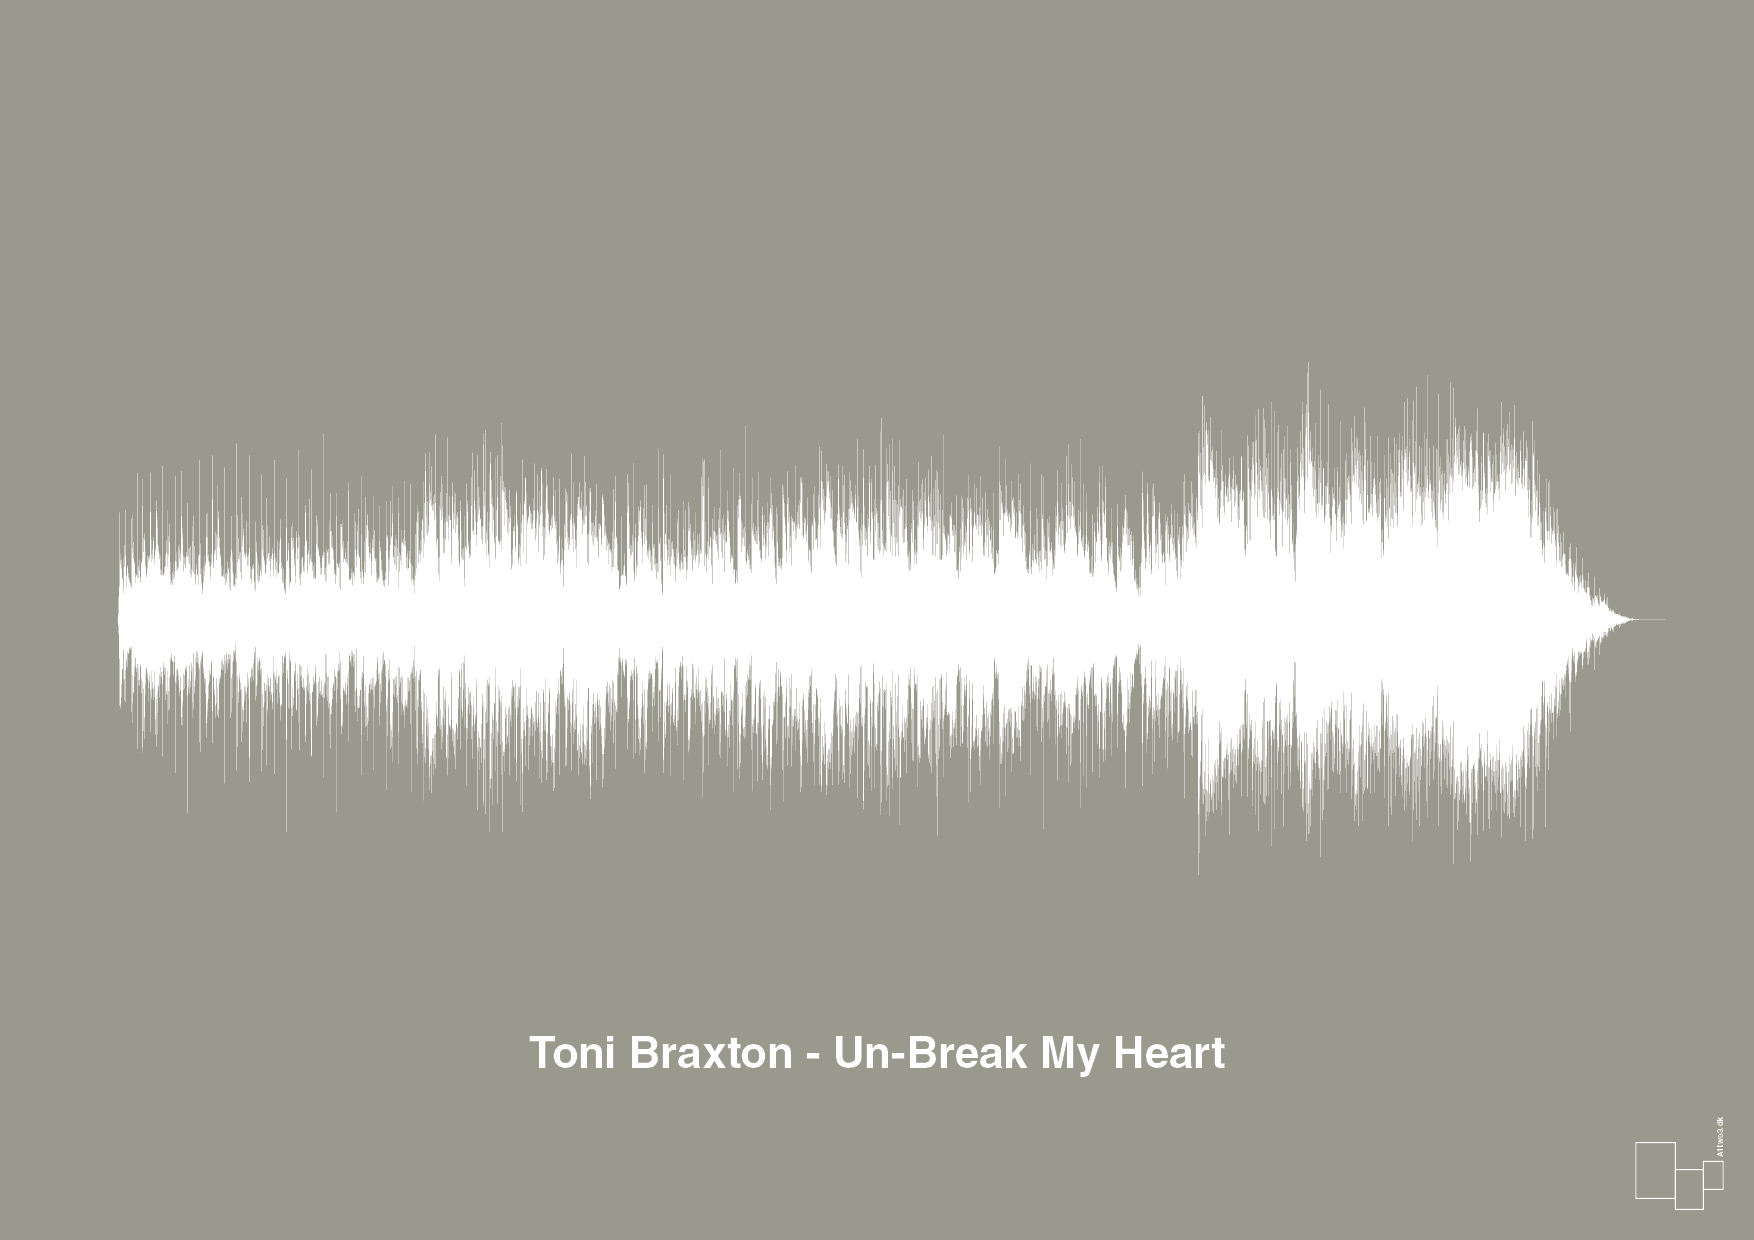 toni braxton - un-break my heart - Plakat med Musik i Battleship Gray